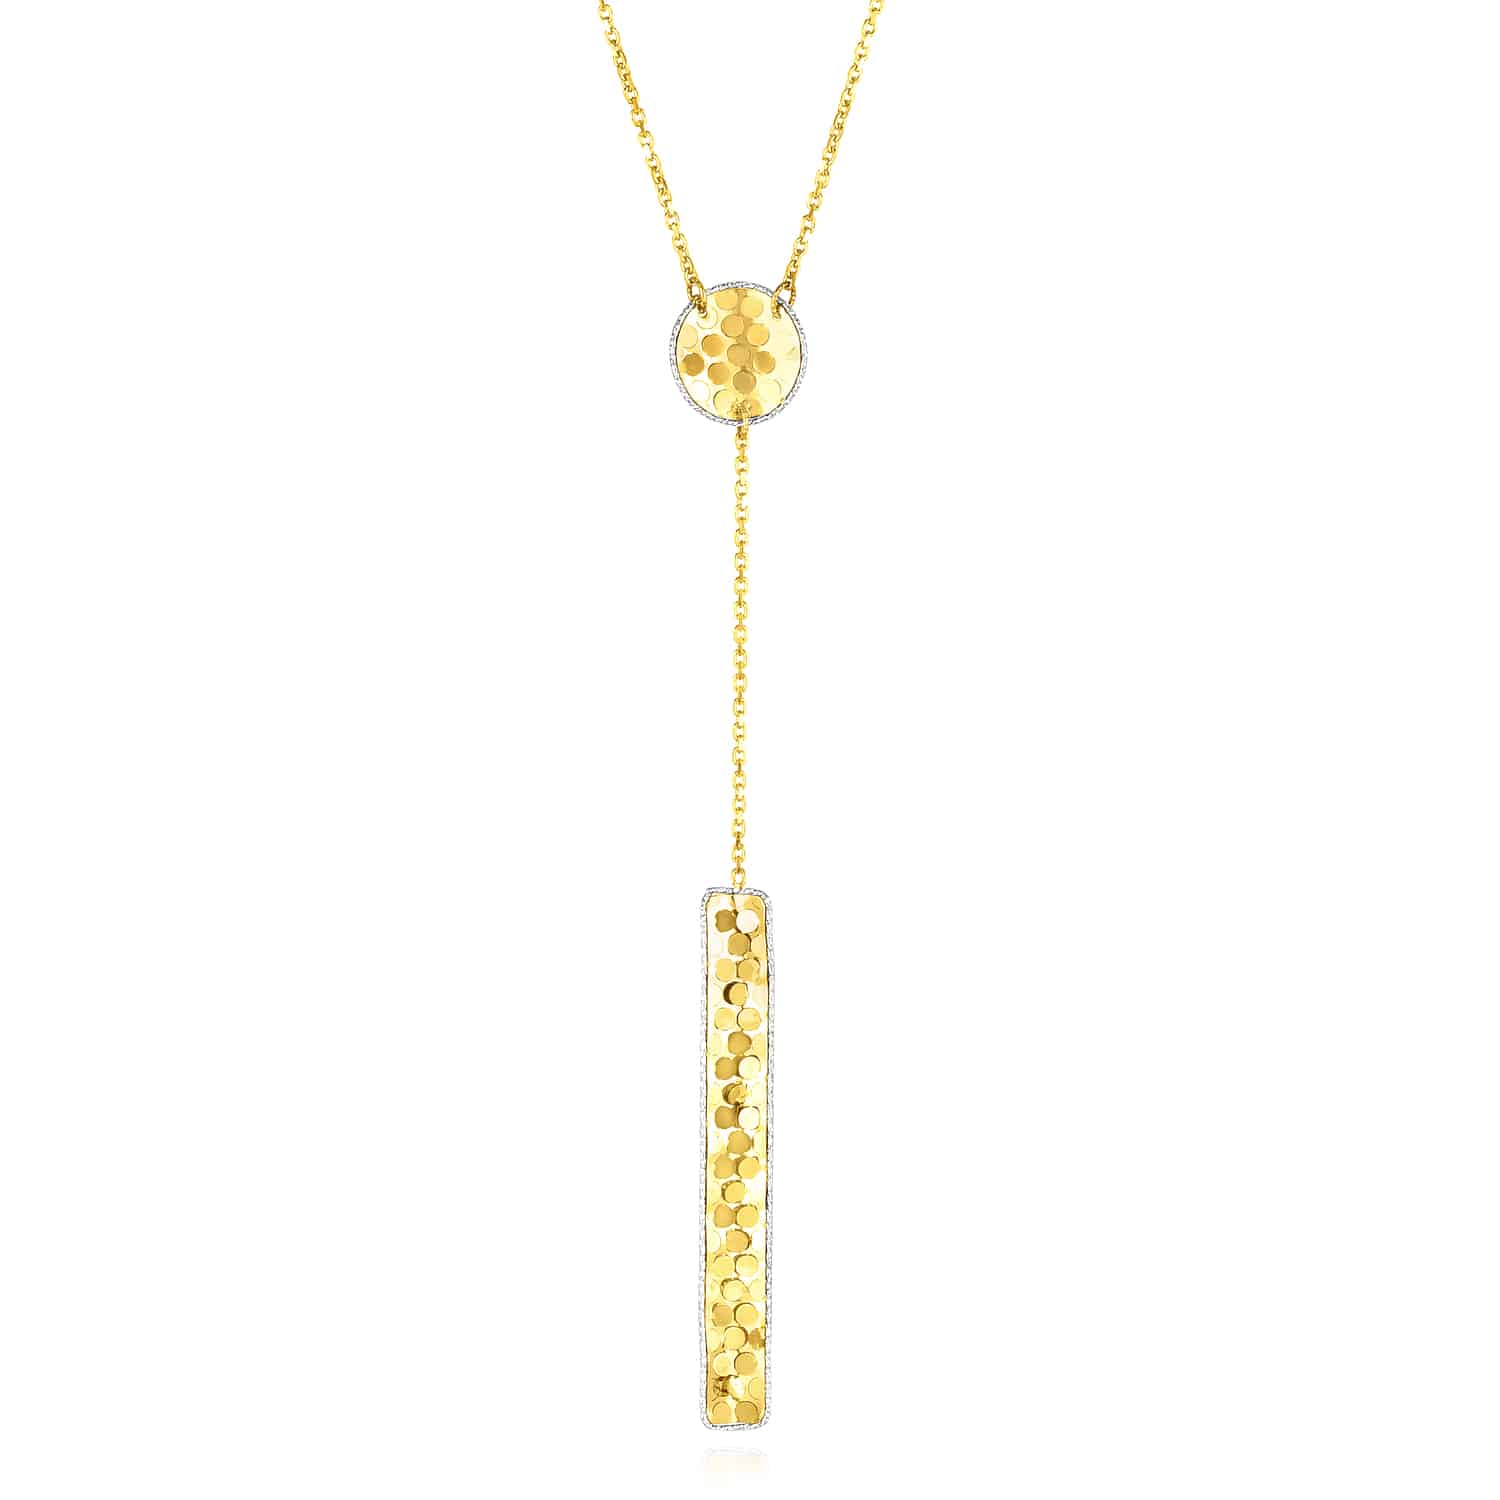 14K Yellow Gold Confetti Lariat Pendant Necklace 16"-18" Adjustable